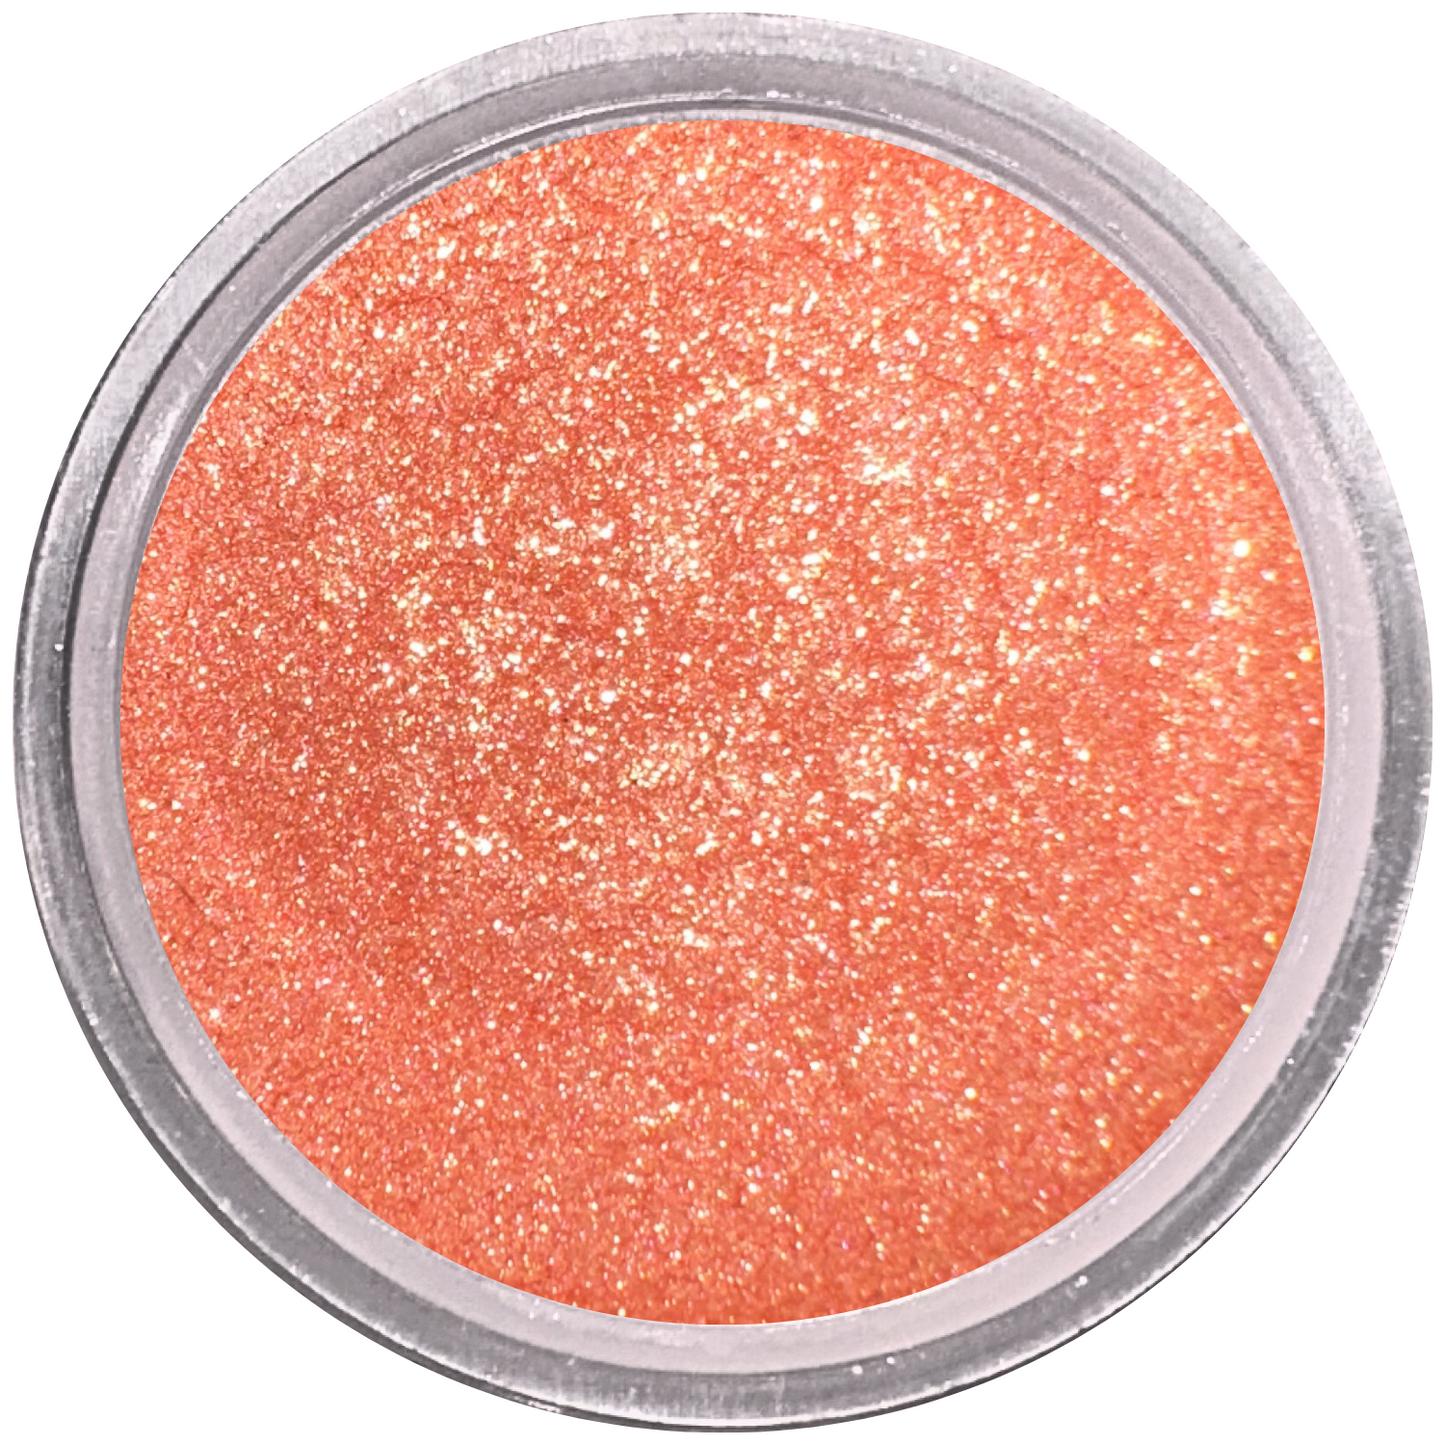 Orange Coral Loose Powder Mineral Eyeshadow Single 3g